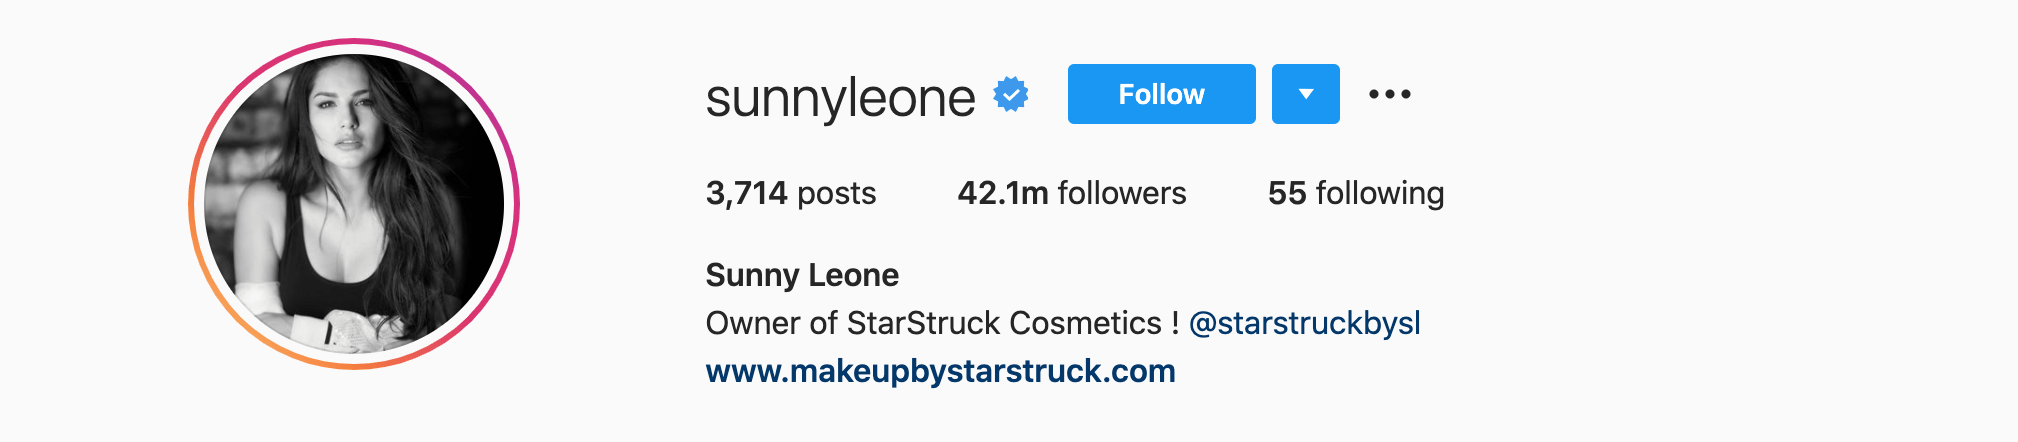 Top Instagram Influencers - SUNNY LEONE 